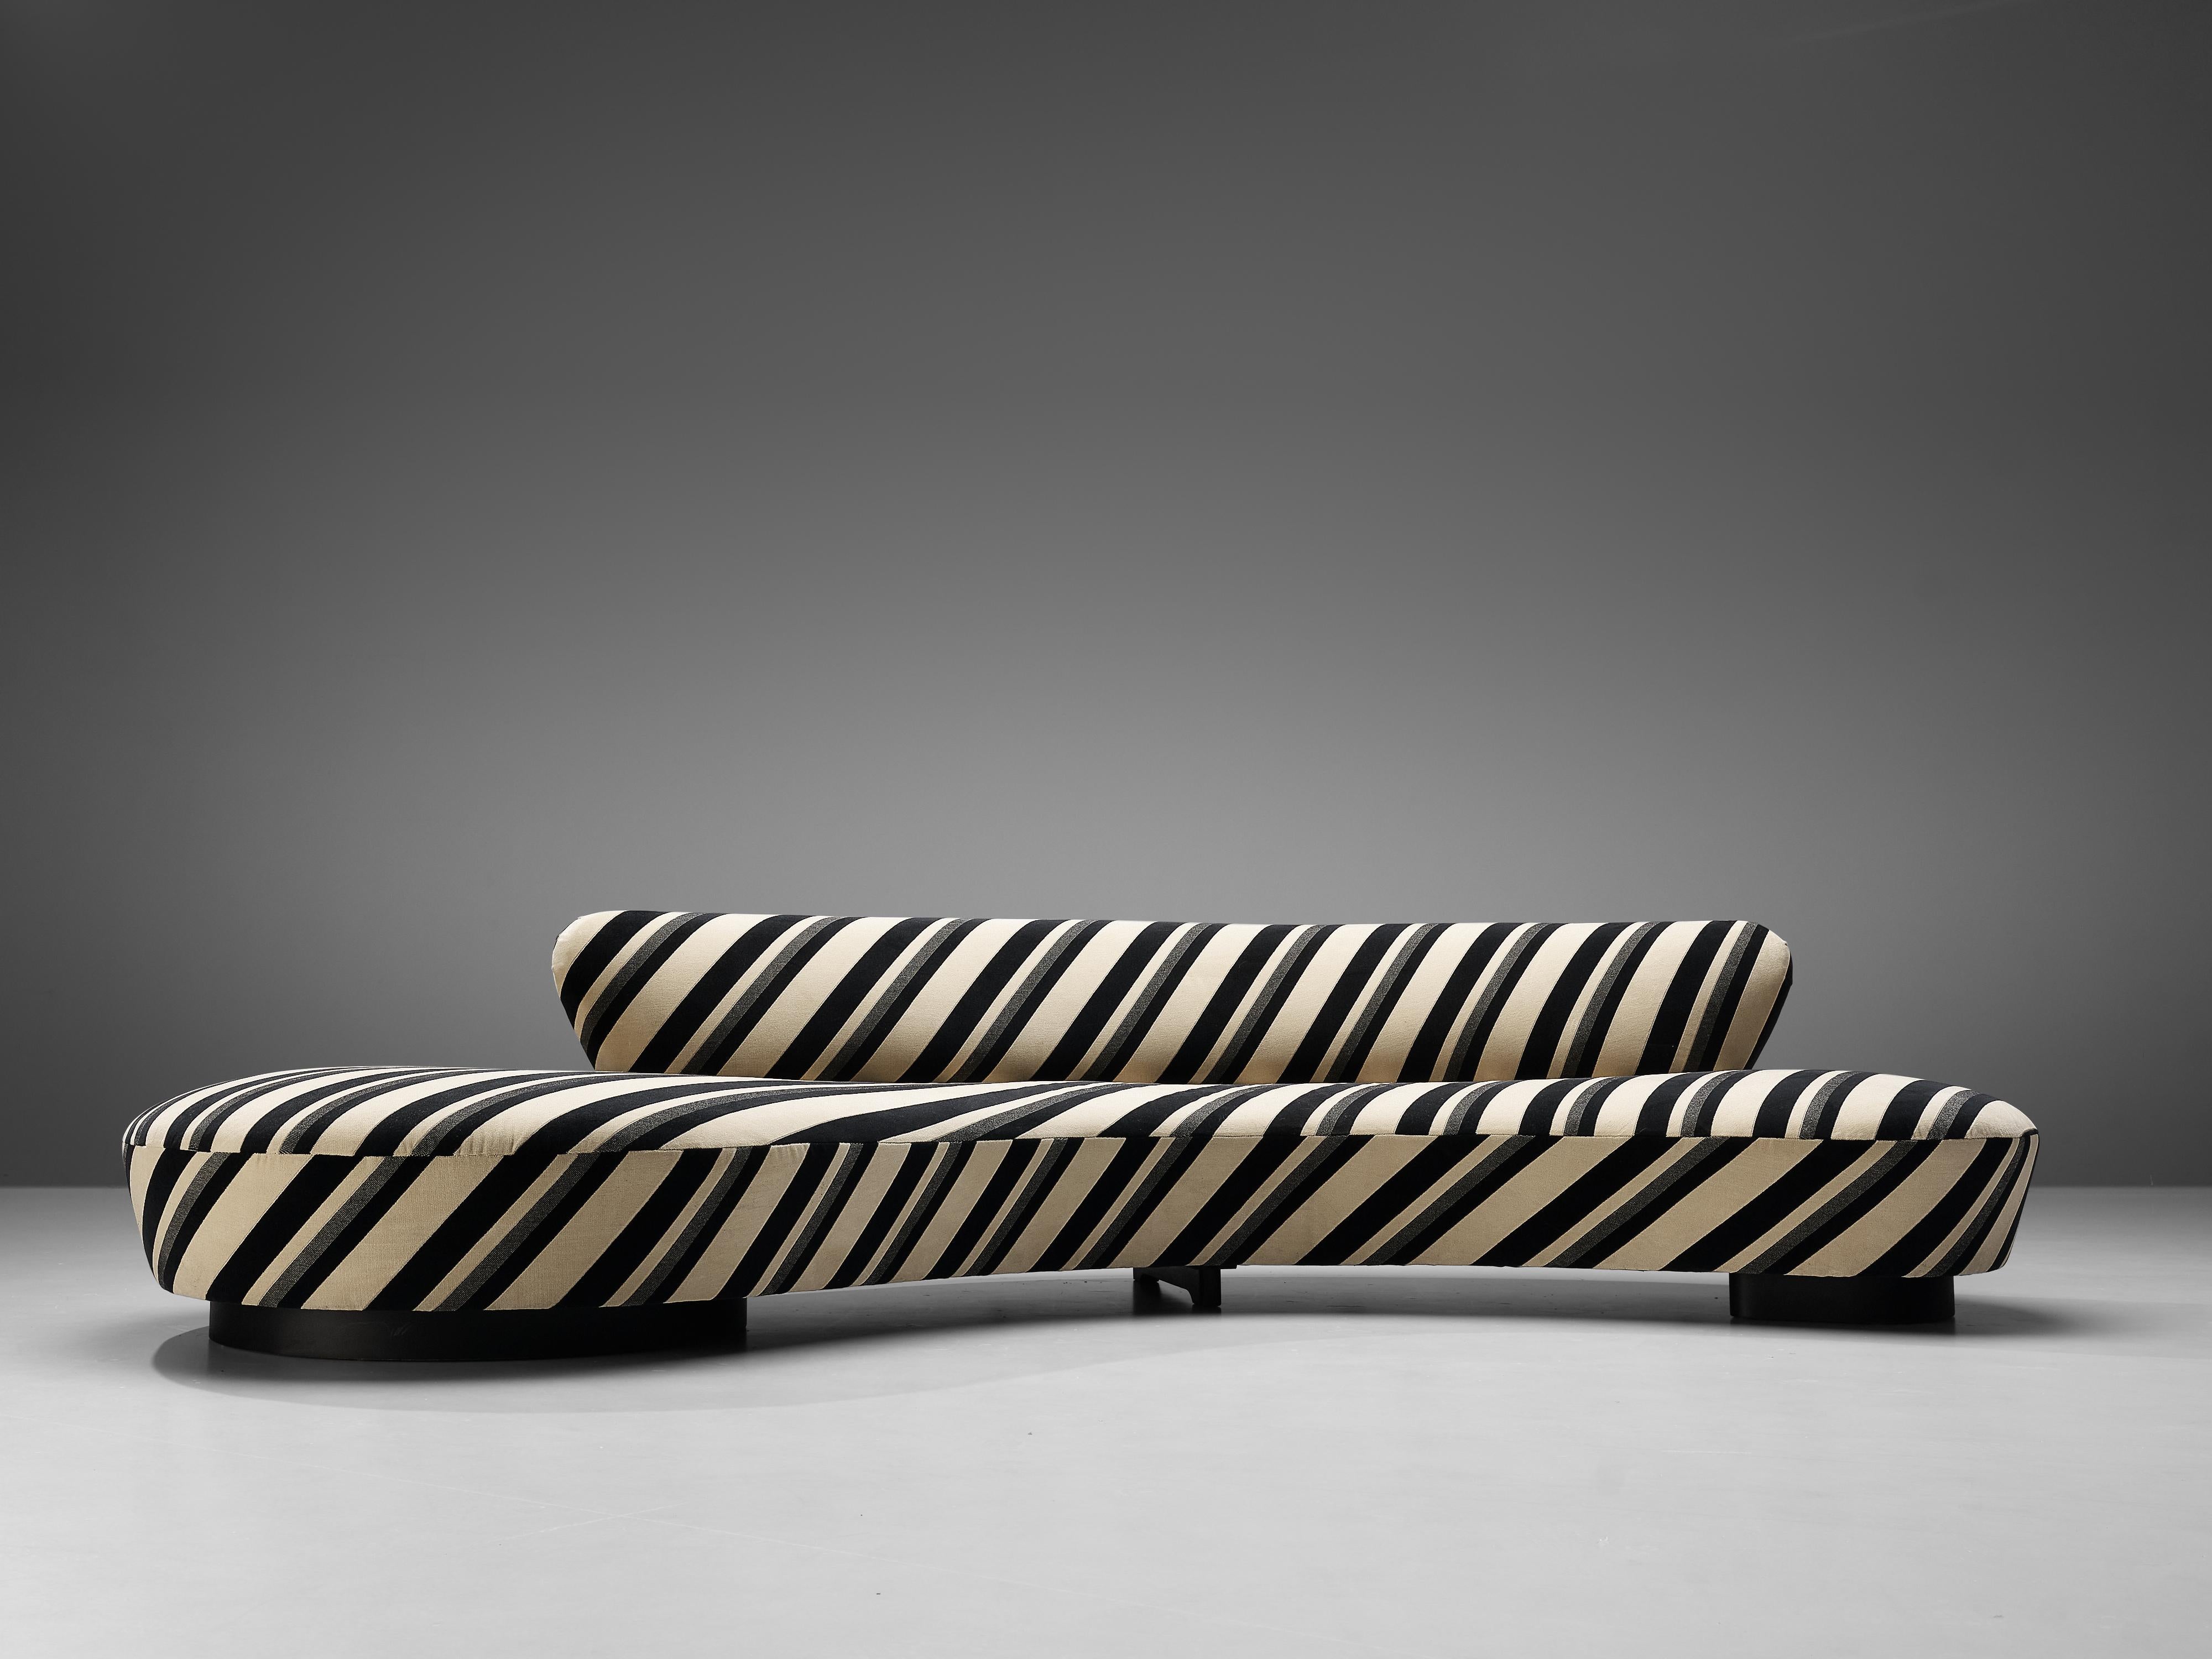 Fabric Iconic Vladimir Kagan 'Serpentine' Sofa in Striped Upholstery